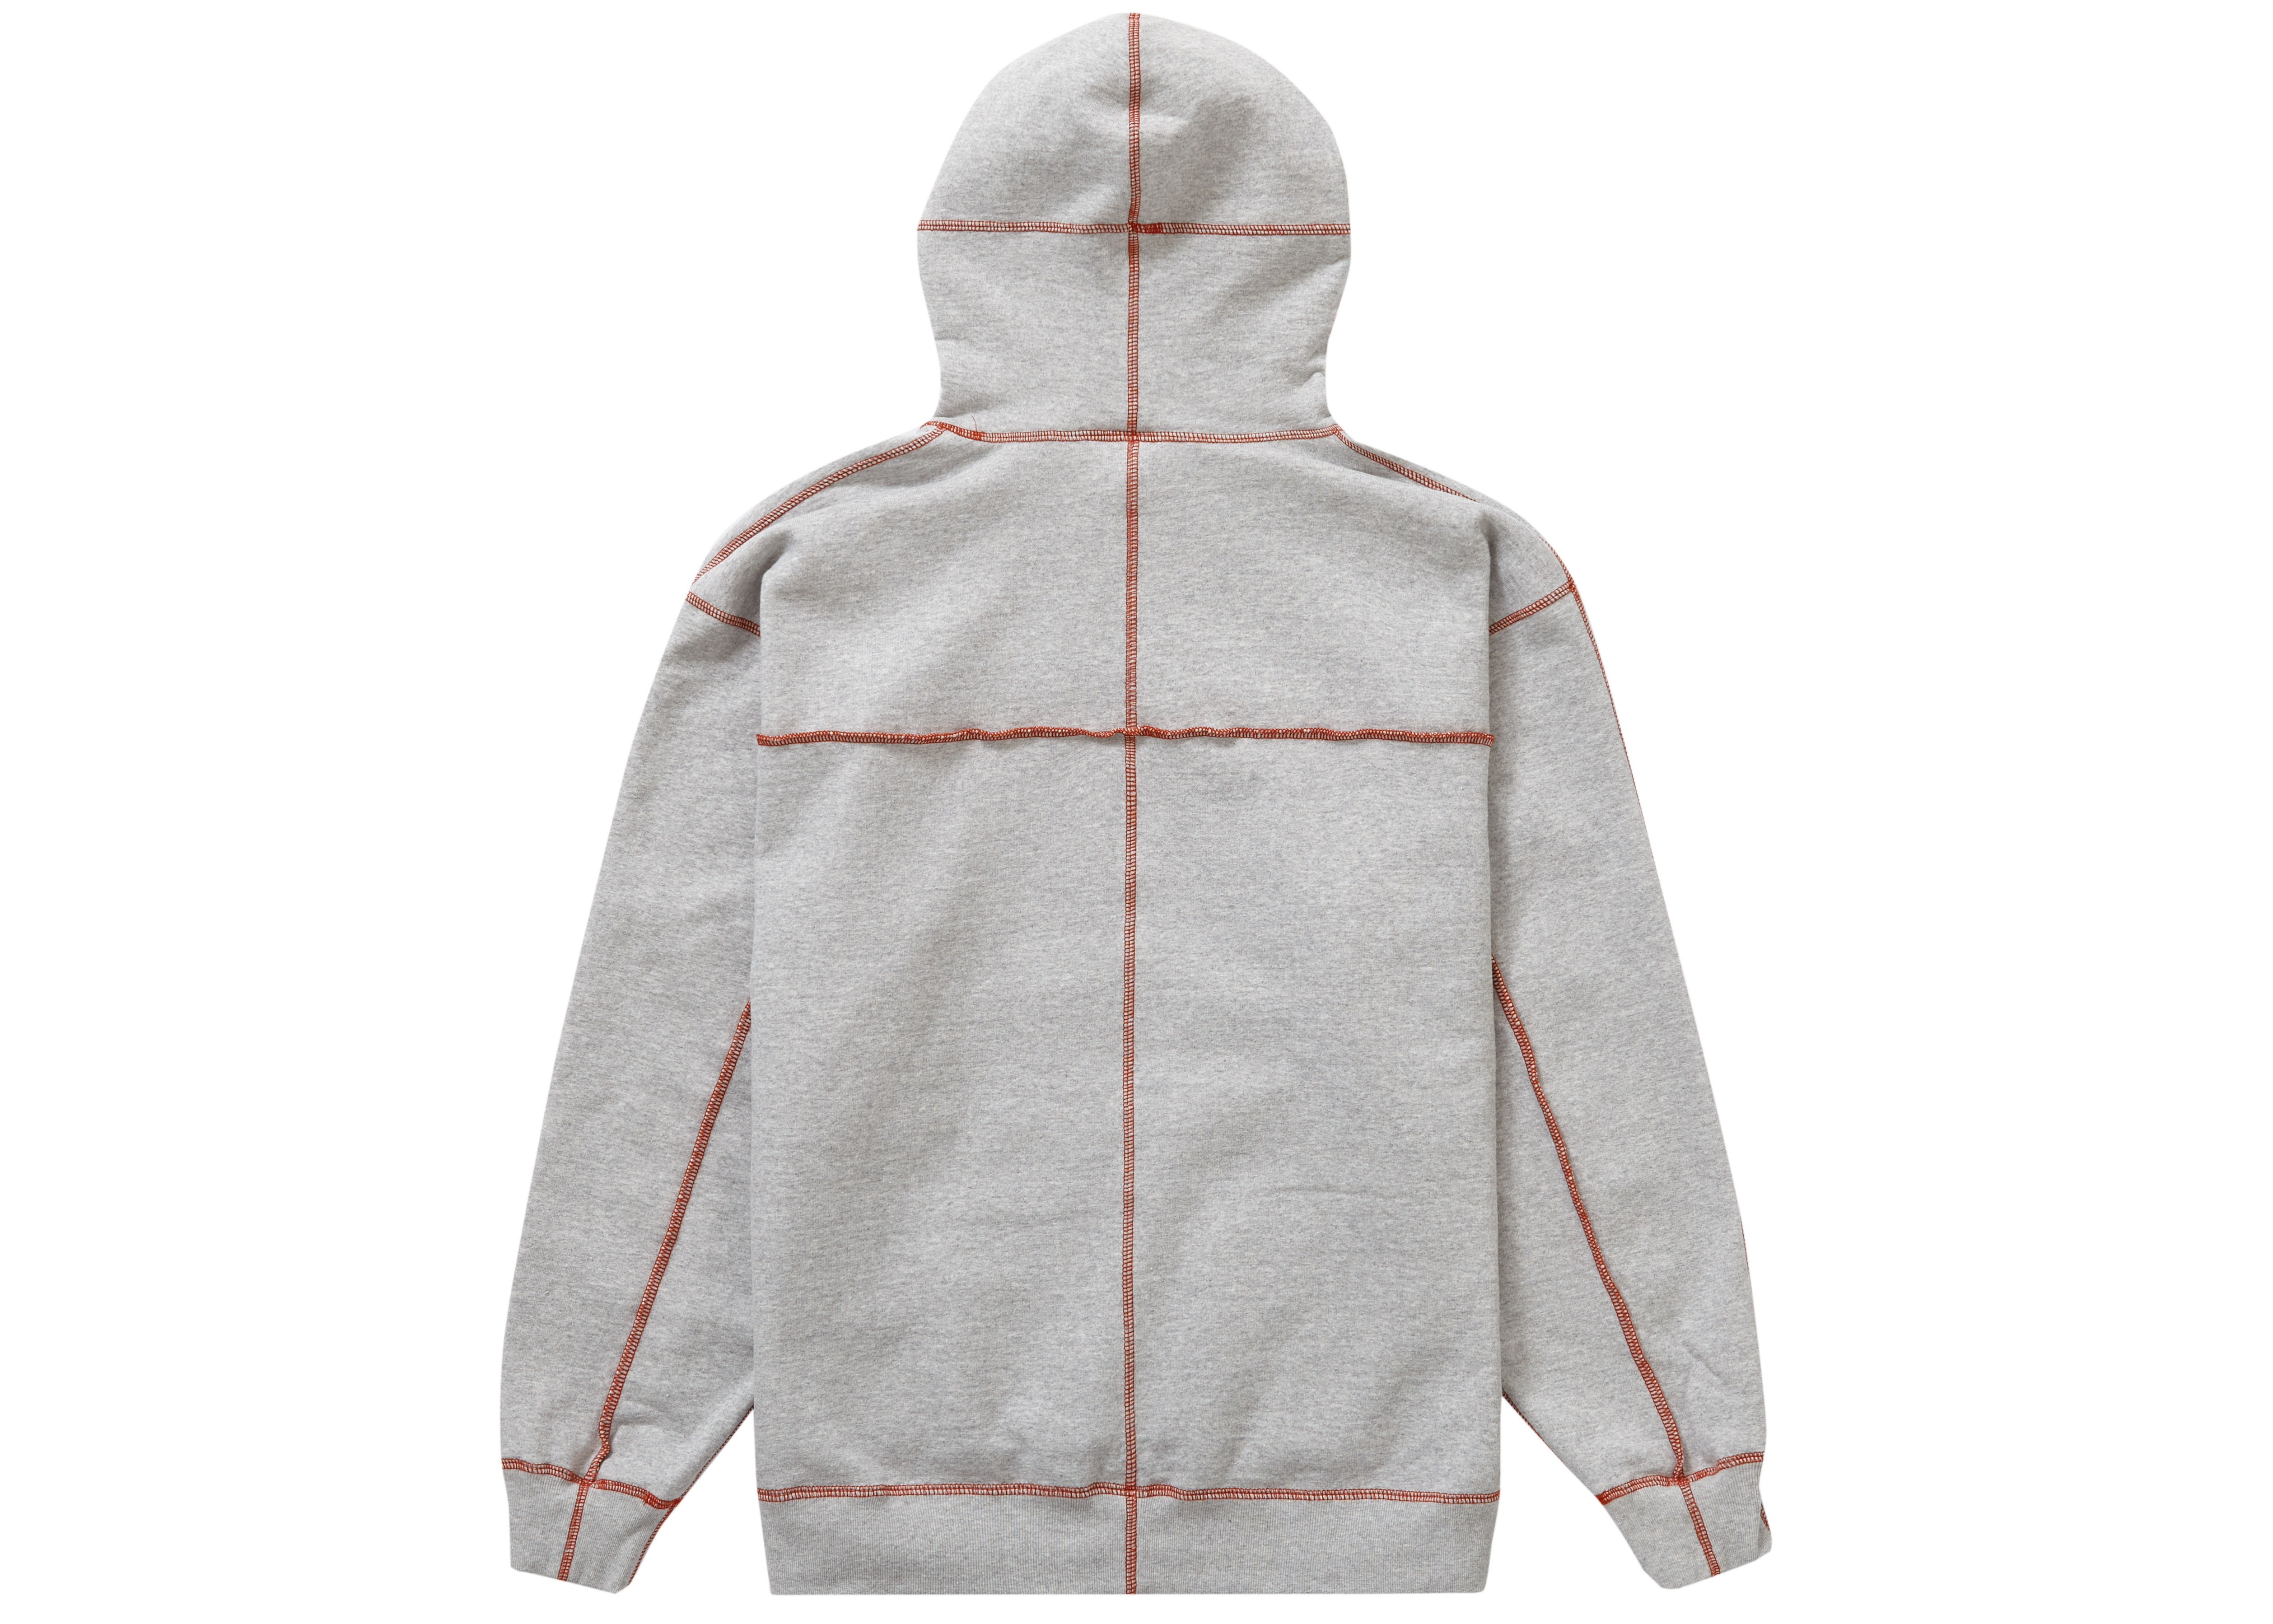 Supreme Coverstitch Hooded Sweatshirt Heather Grey メンズ - SS22 - JP